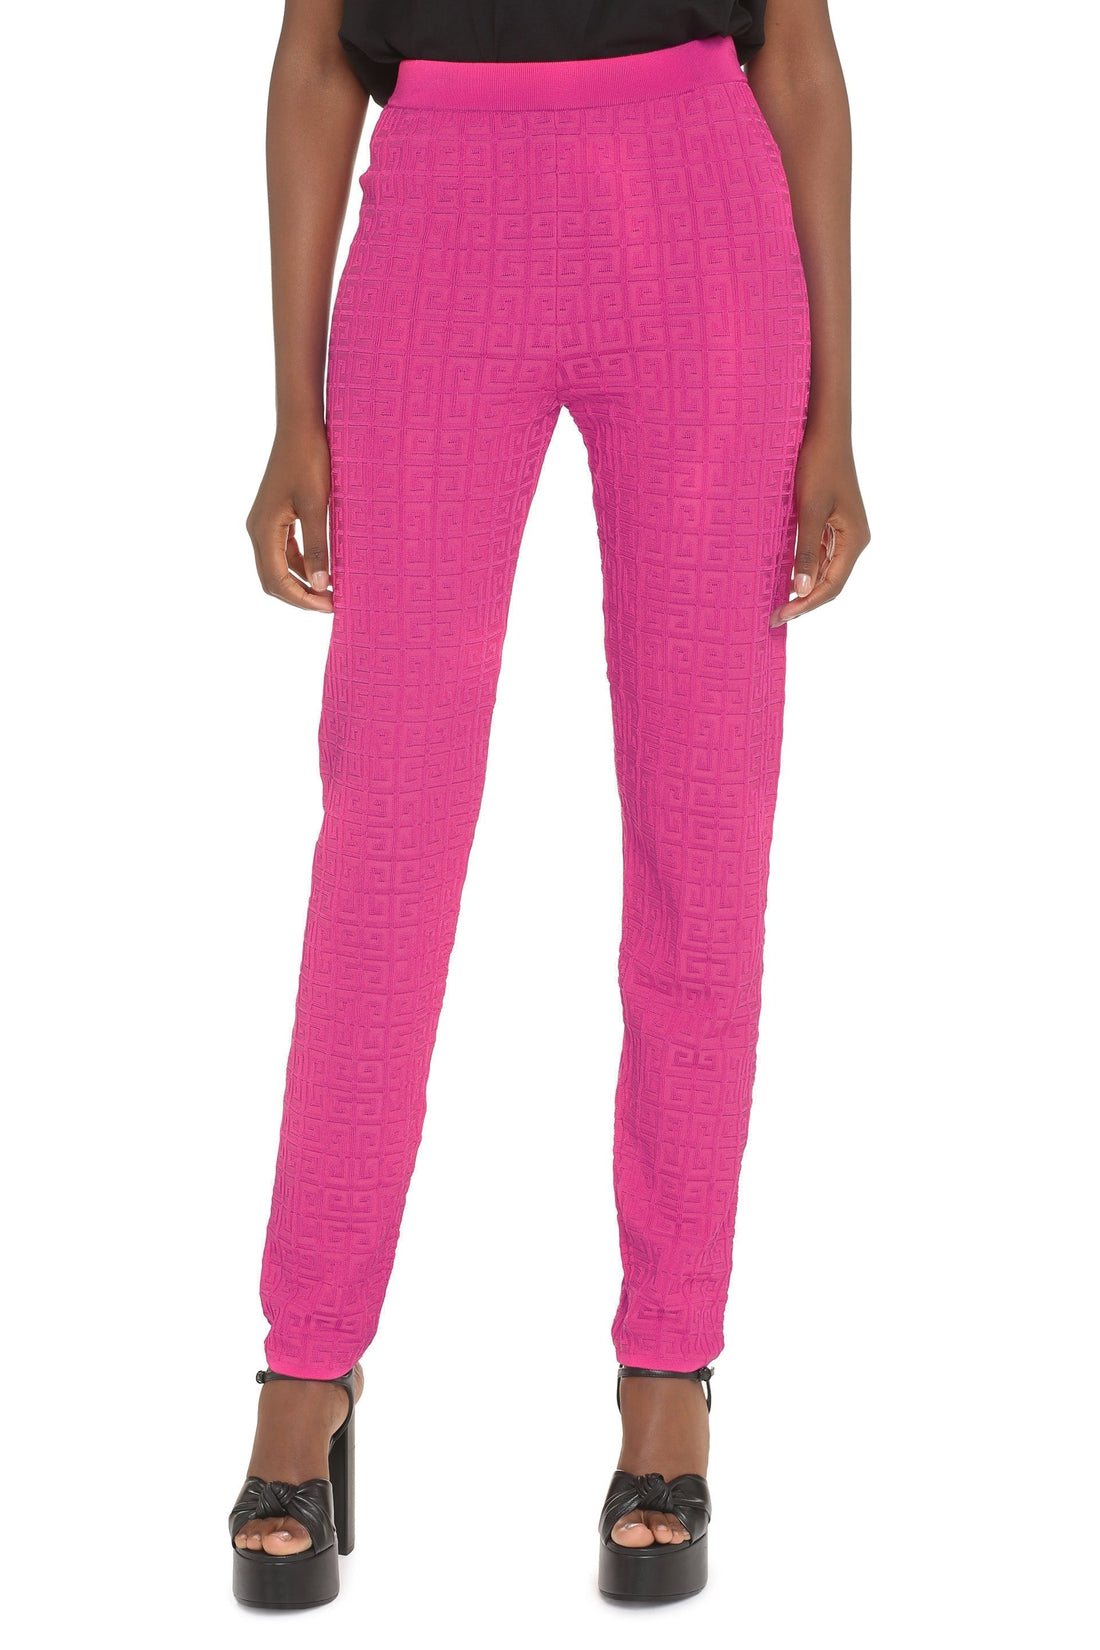 Givenchy-OUTLET-SALE-Jacquard-knit trousers-ARCHIVIST